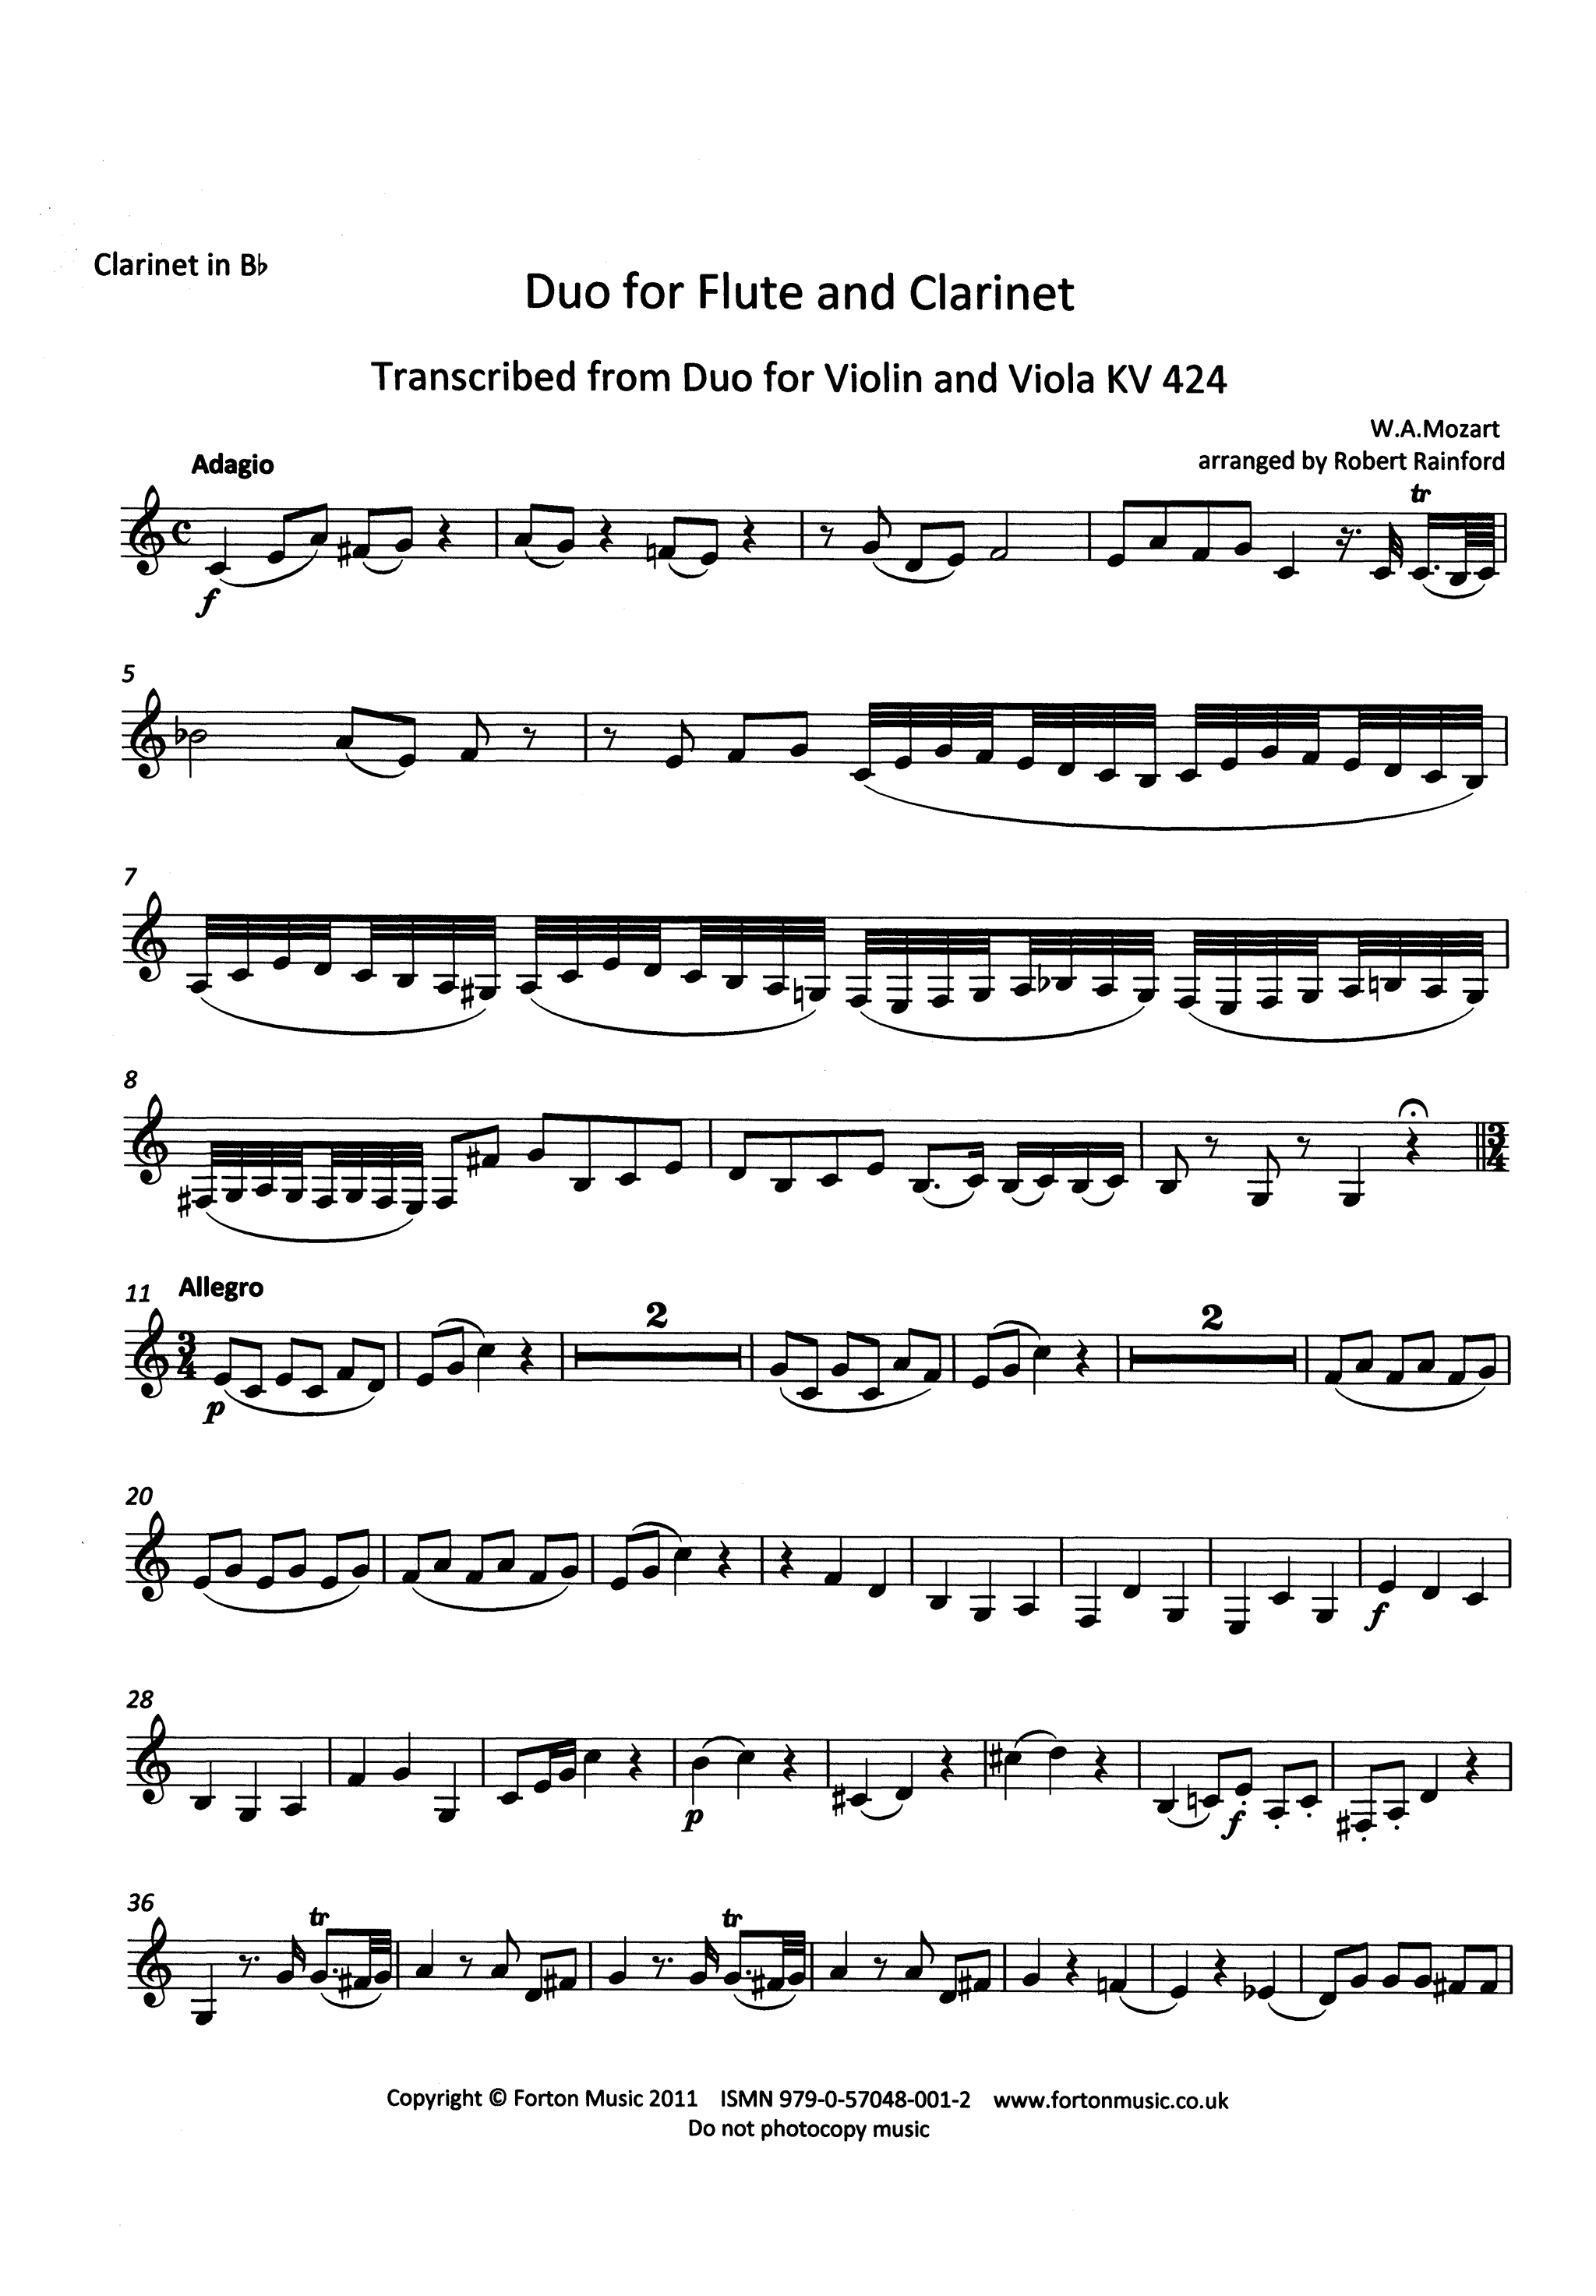 Mozart Duo No. 2, K. 424 flute and clarinet arrangement clarinet part movement 1